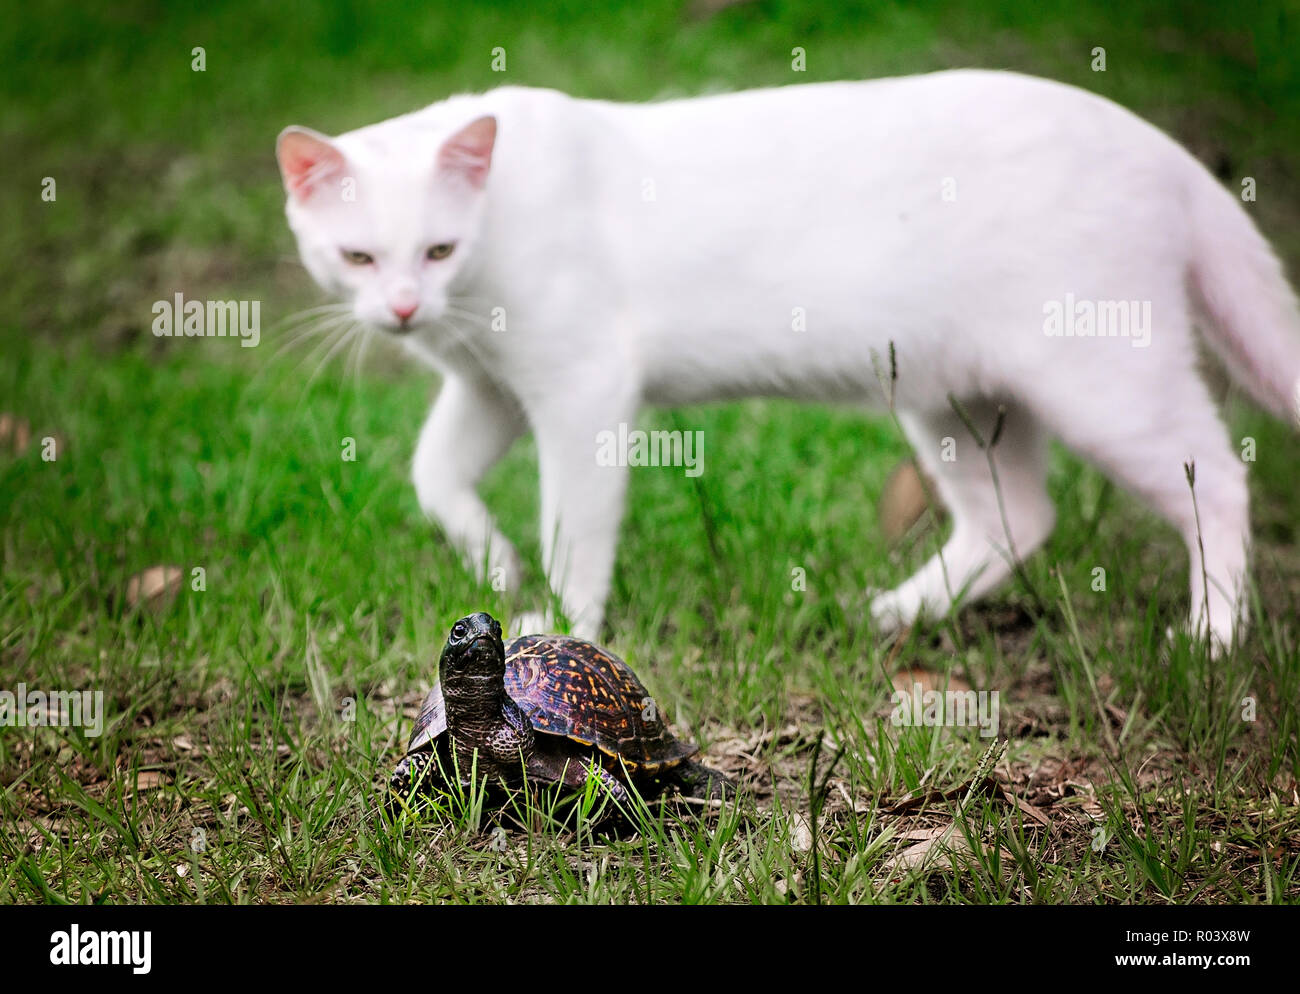 Gato tortuga fotografías e imágenes de alta resolución - Alamy